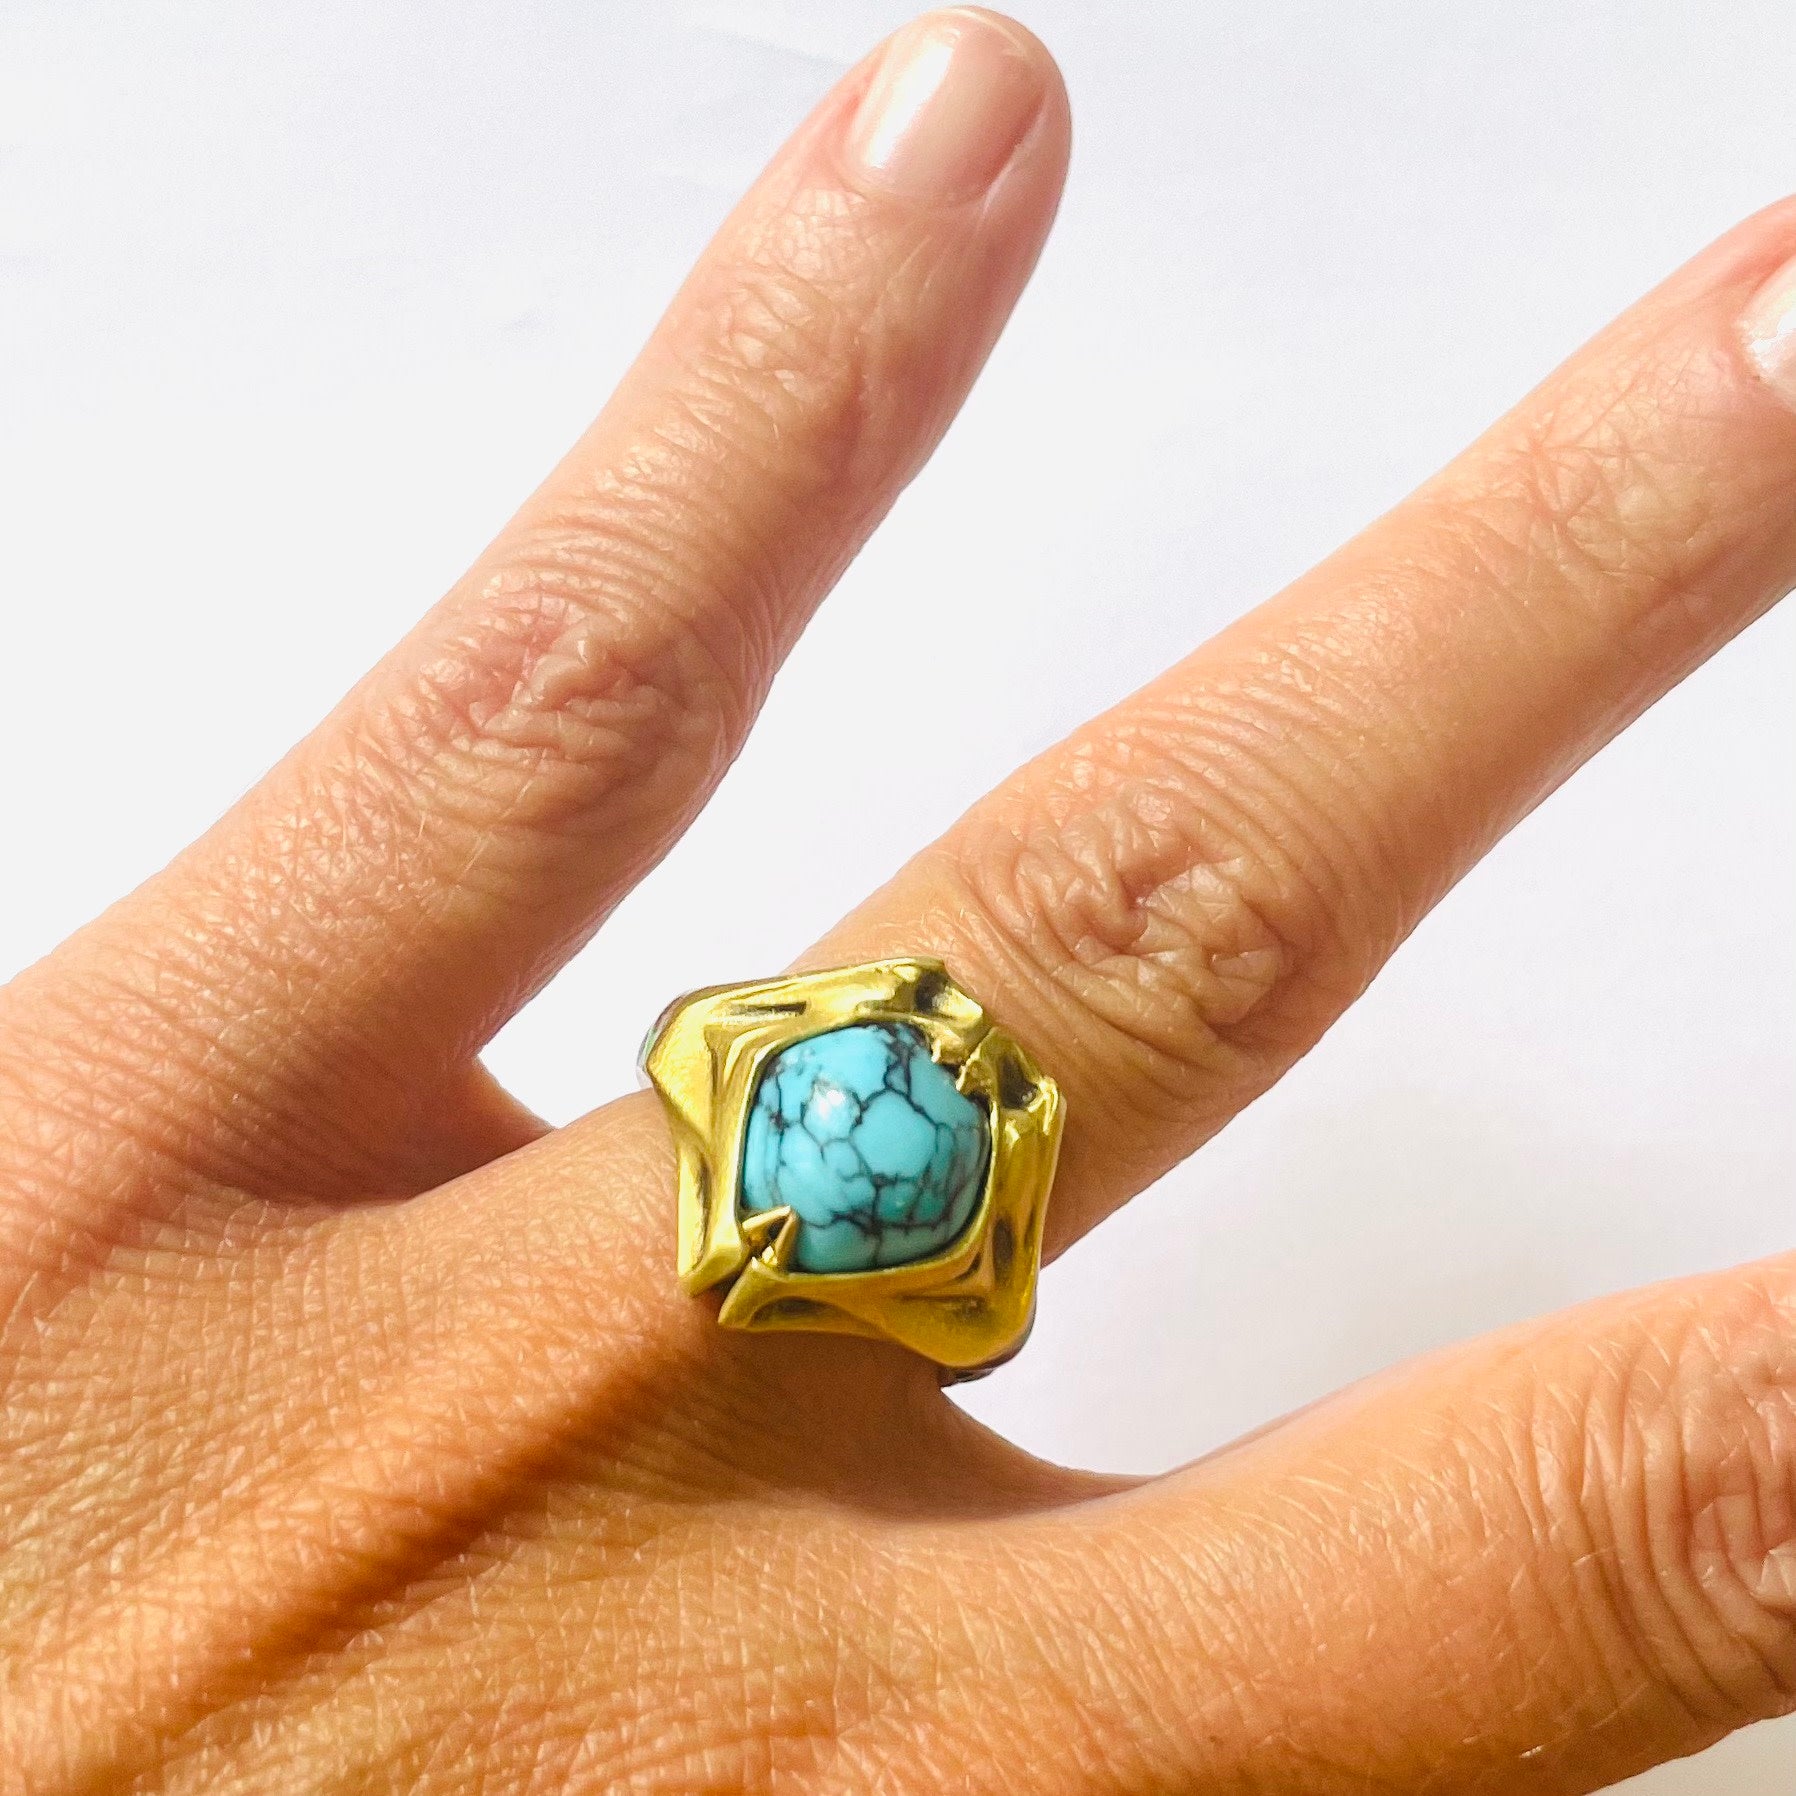 Lucien Galliard Art Nouveau 18KT Yellow Gold Turquoise & Enamel Snake Ring on finger